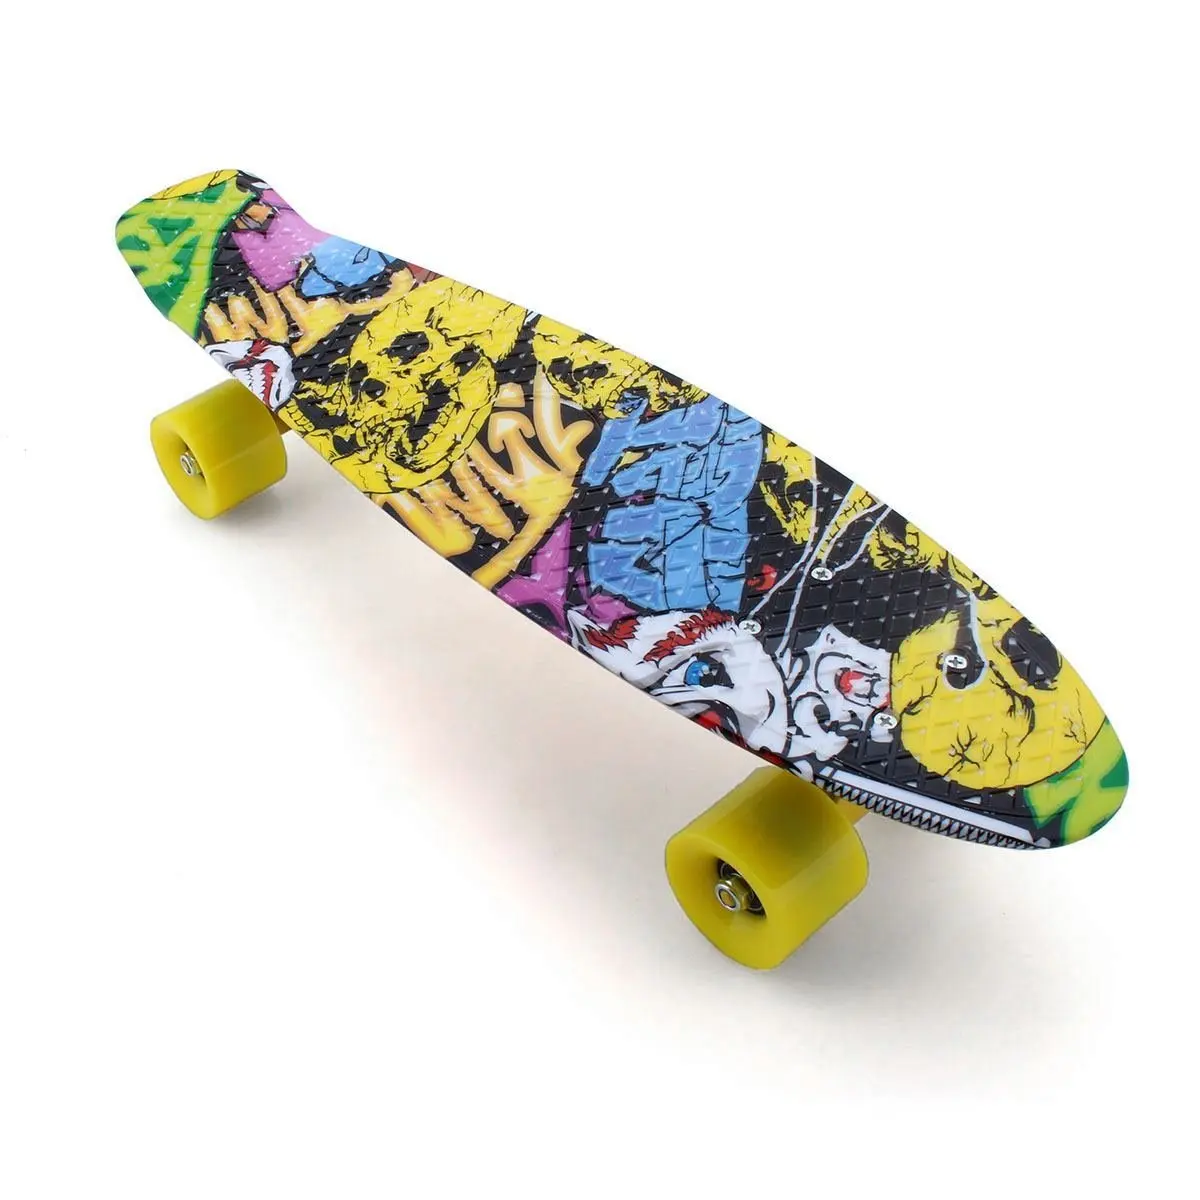 skateboard dc